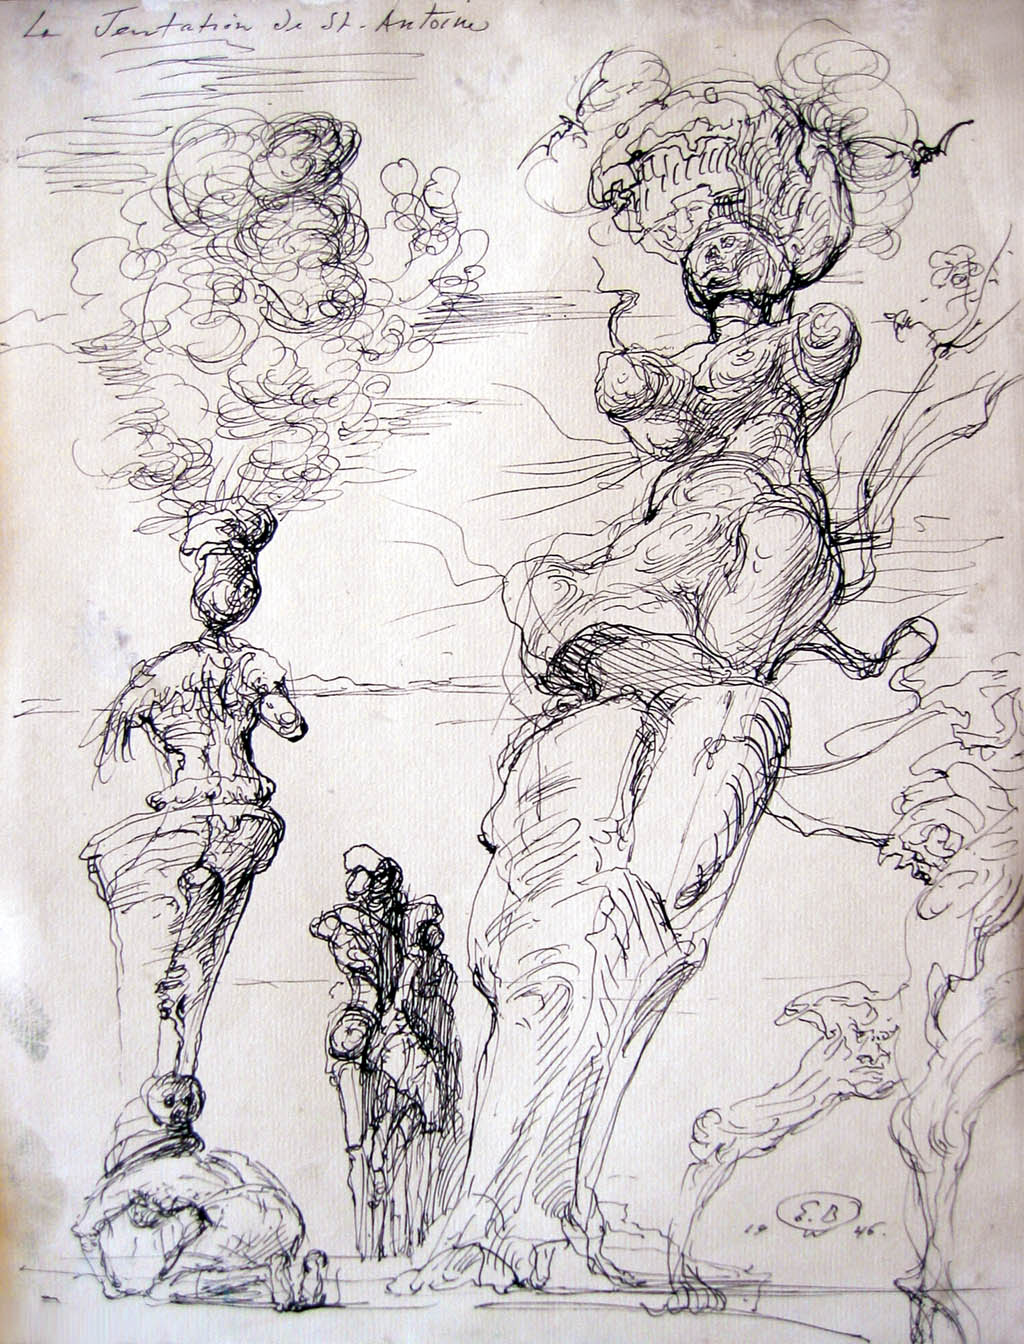 Eugene Berman - Eugene Berman - La tentation de St. Antoine (The Temptation of St. Anthony) - 1946 ink on paper